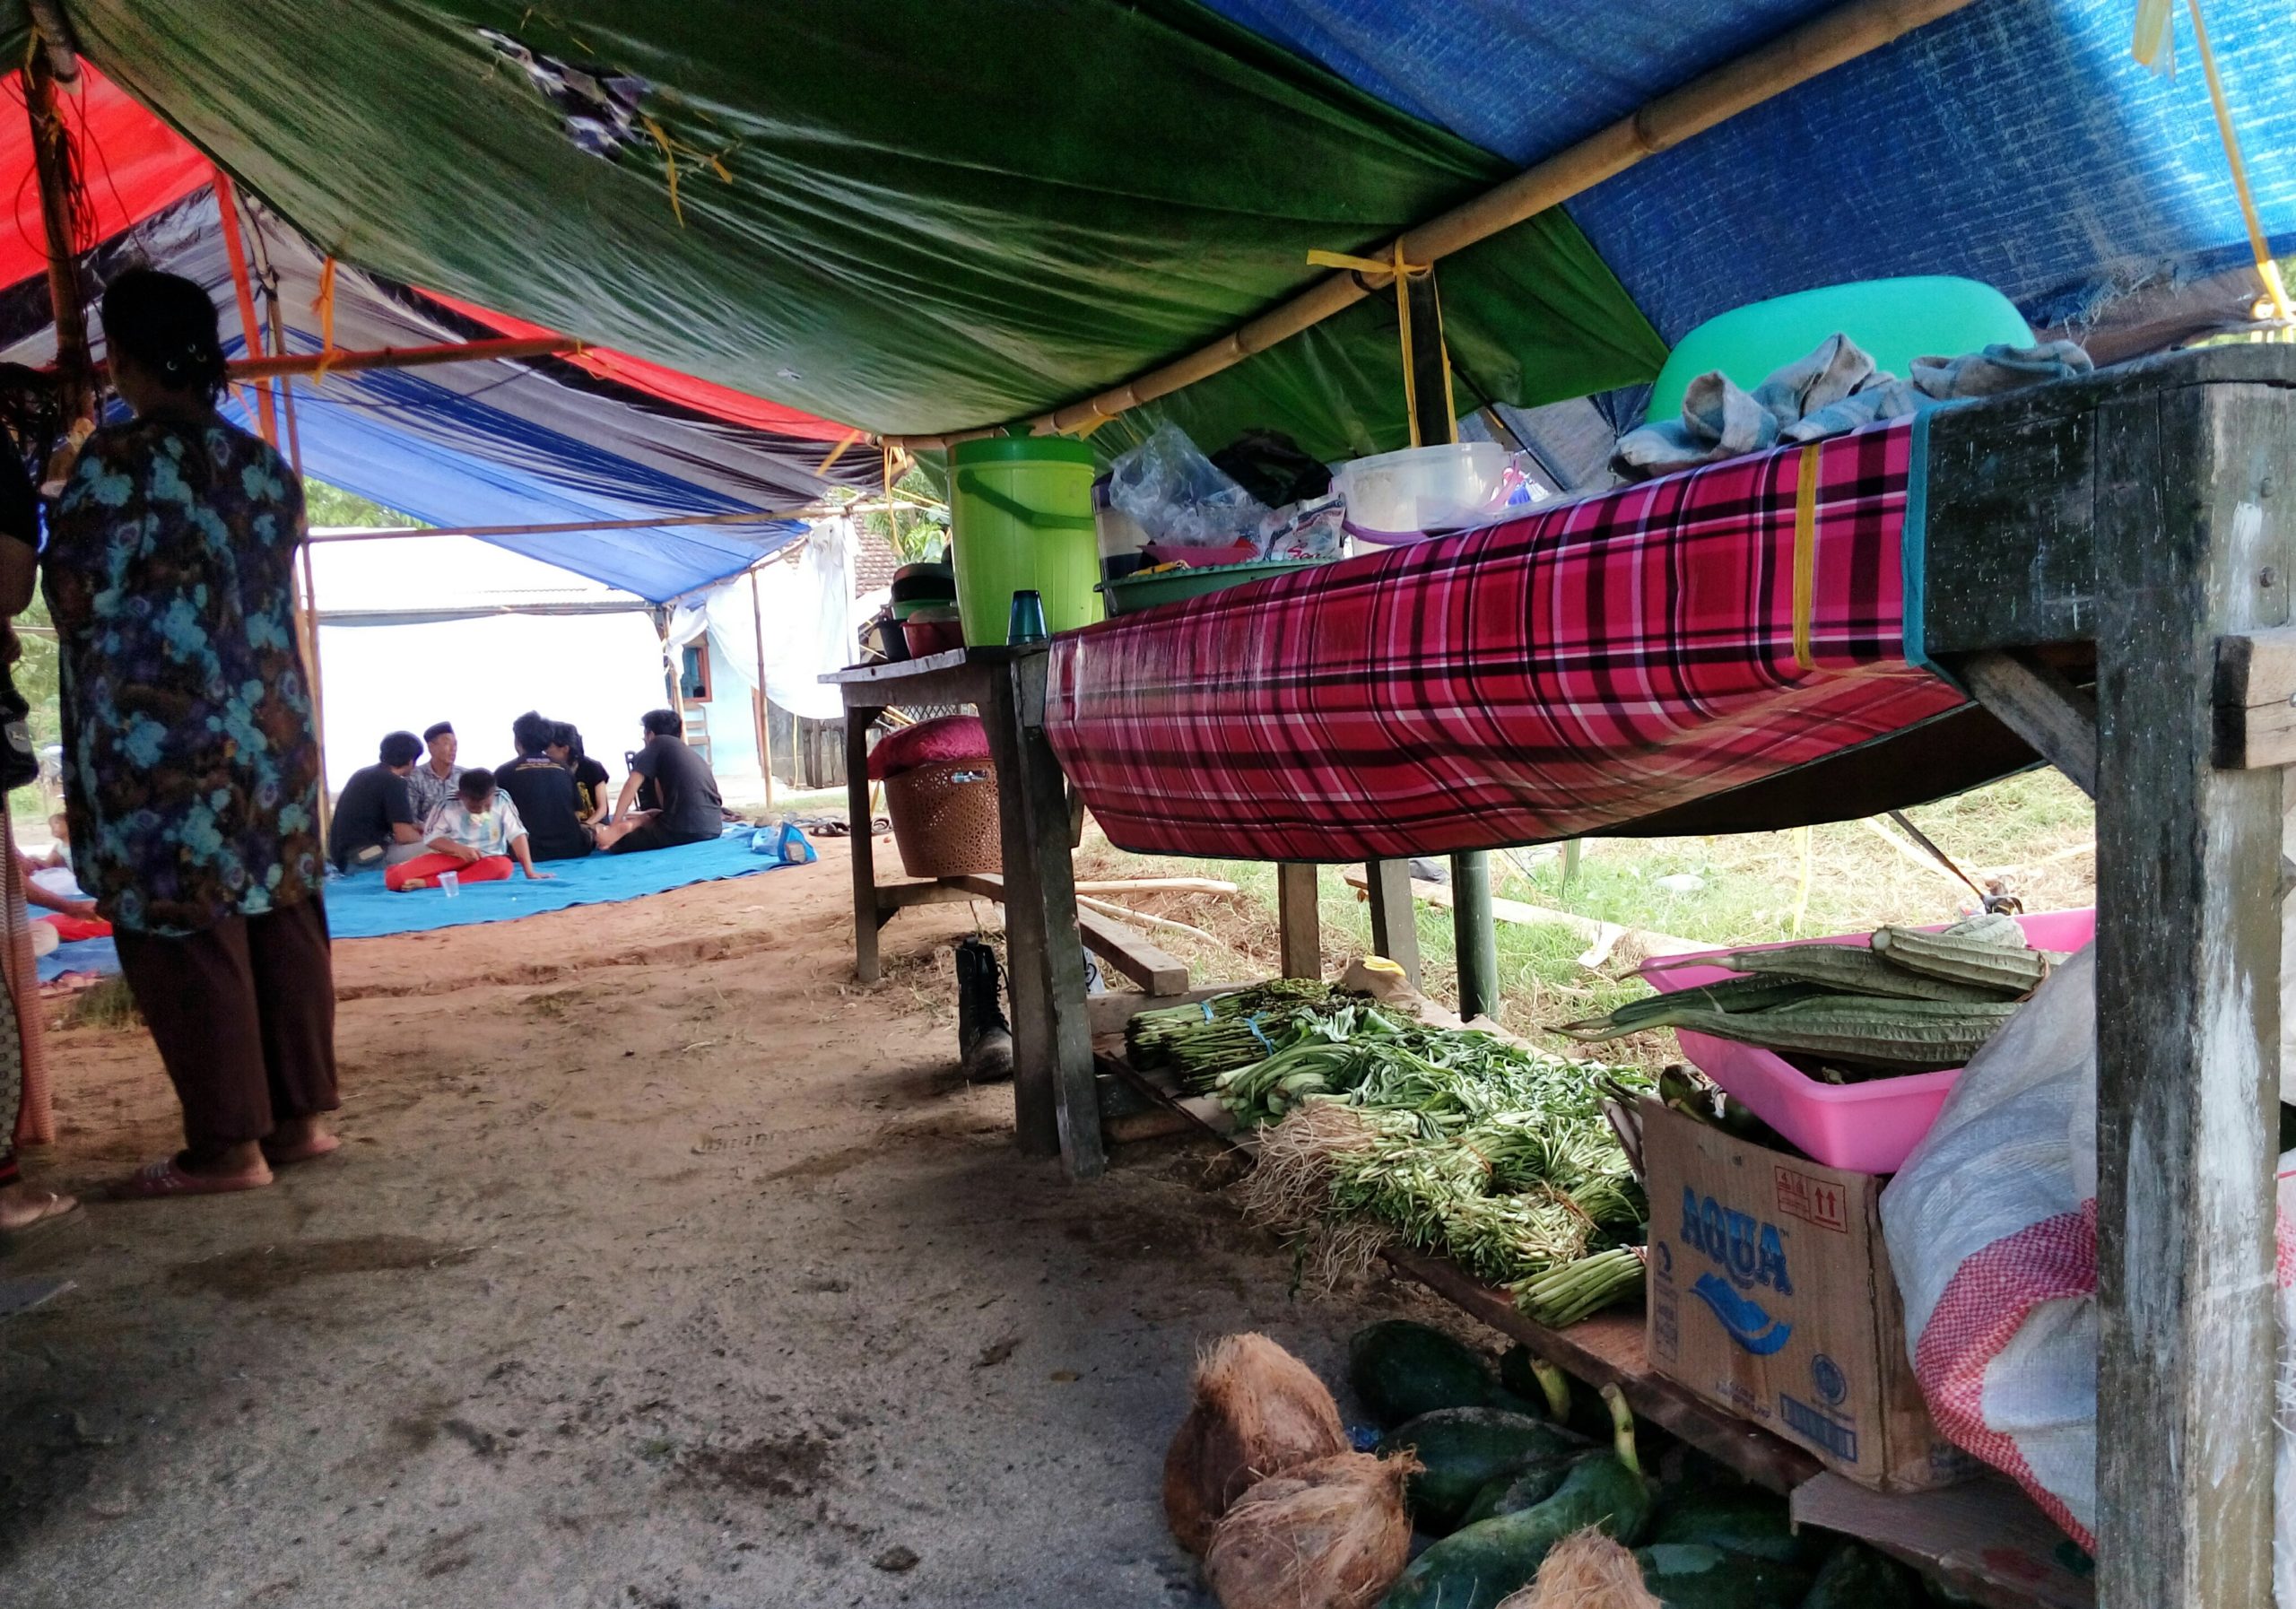 Sayur mayur sumbangan atau gotong royong warga di dapur umum tenda perjunagan Dusun Pancer. Foto: RZ Hakim/Mongabay Indonesia